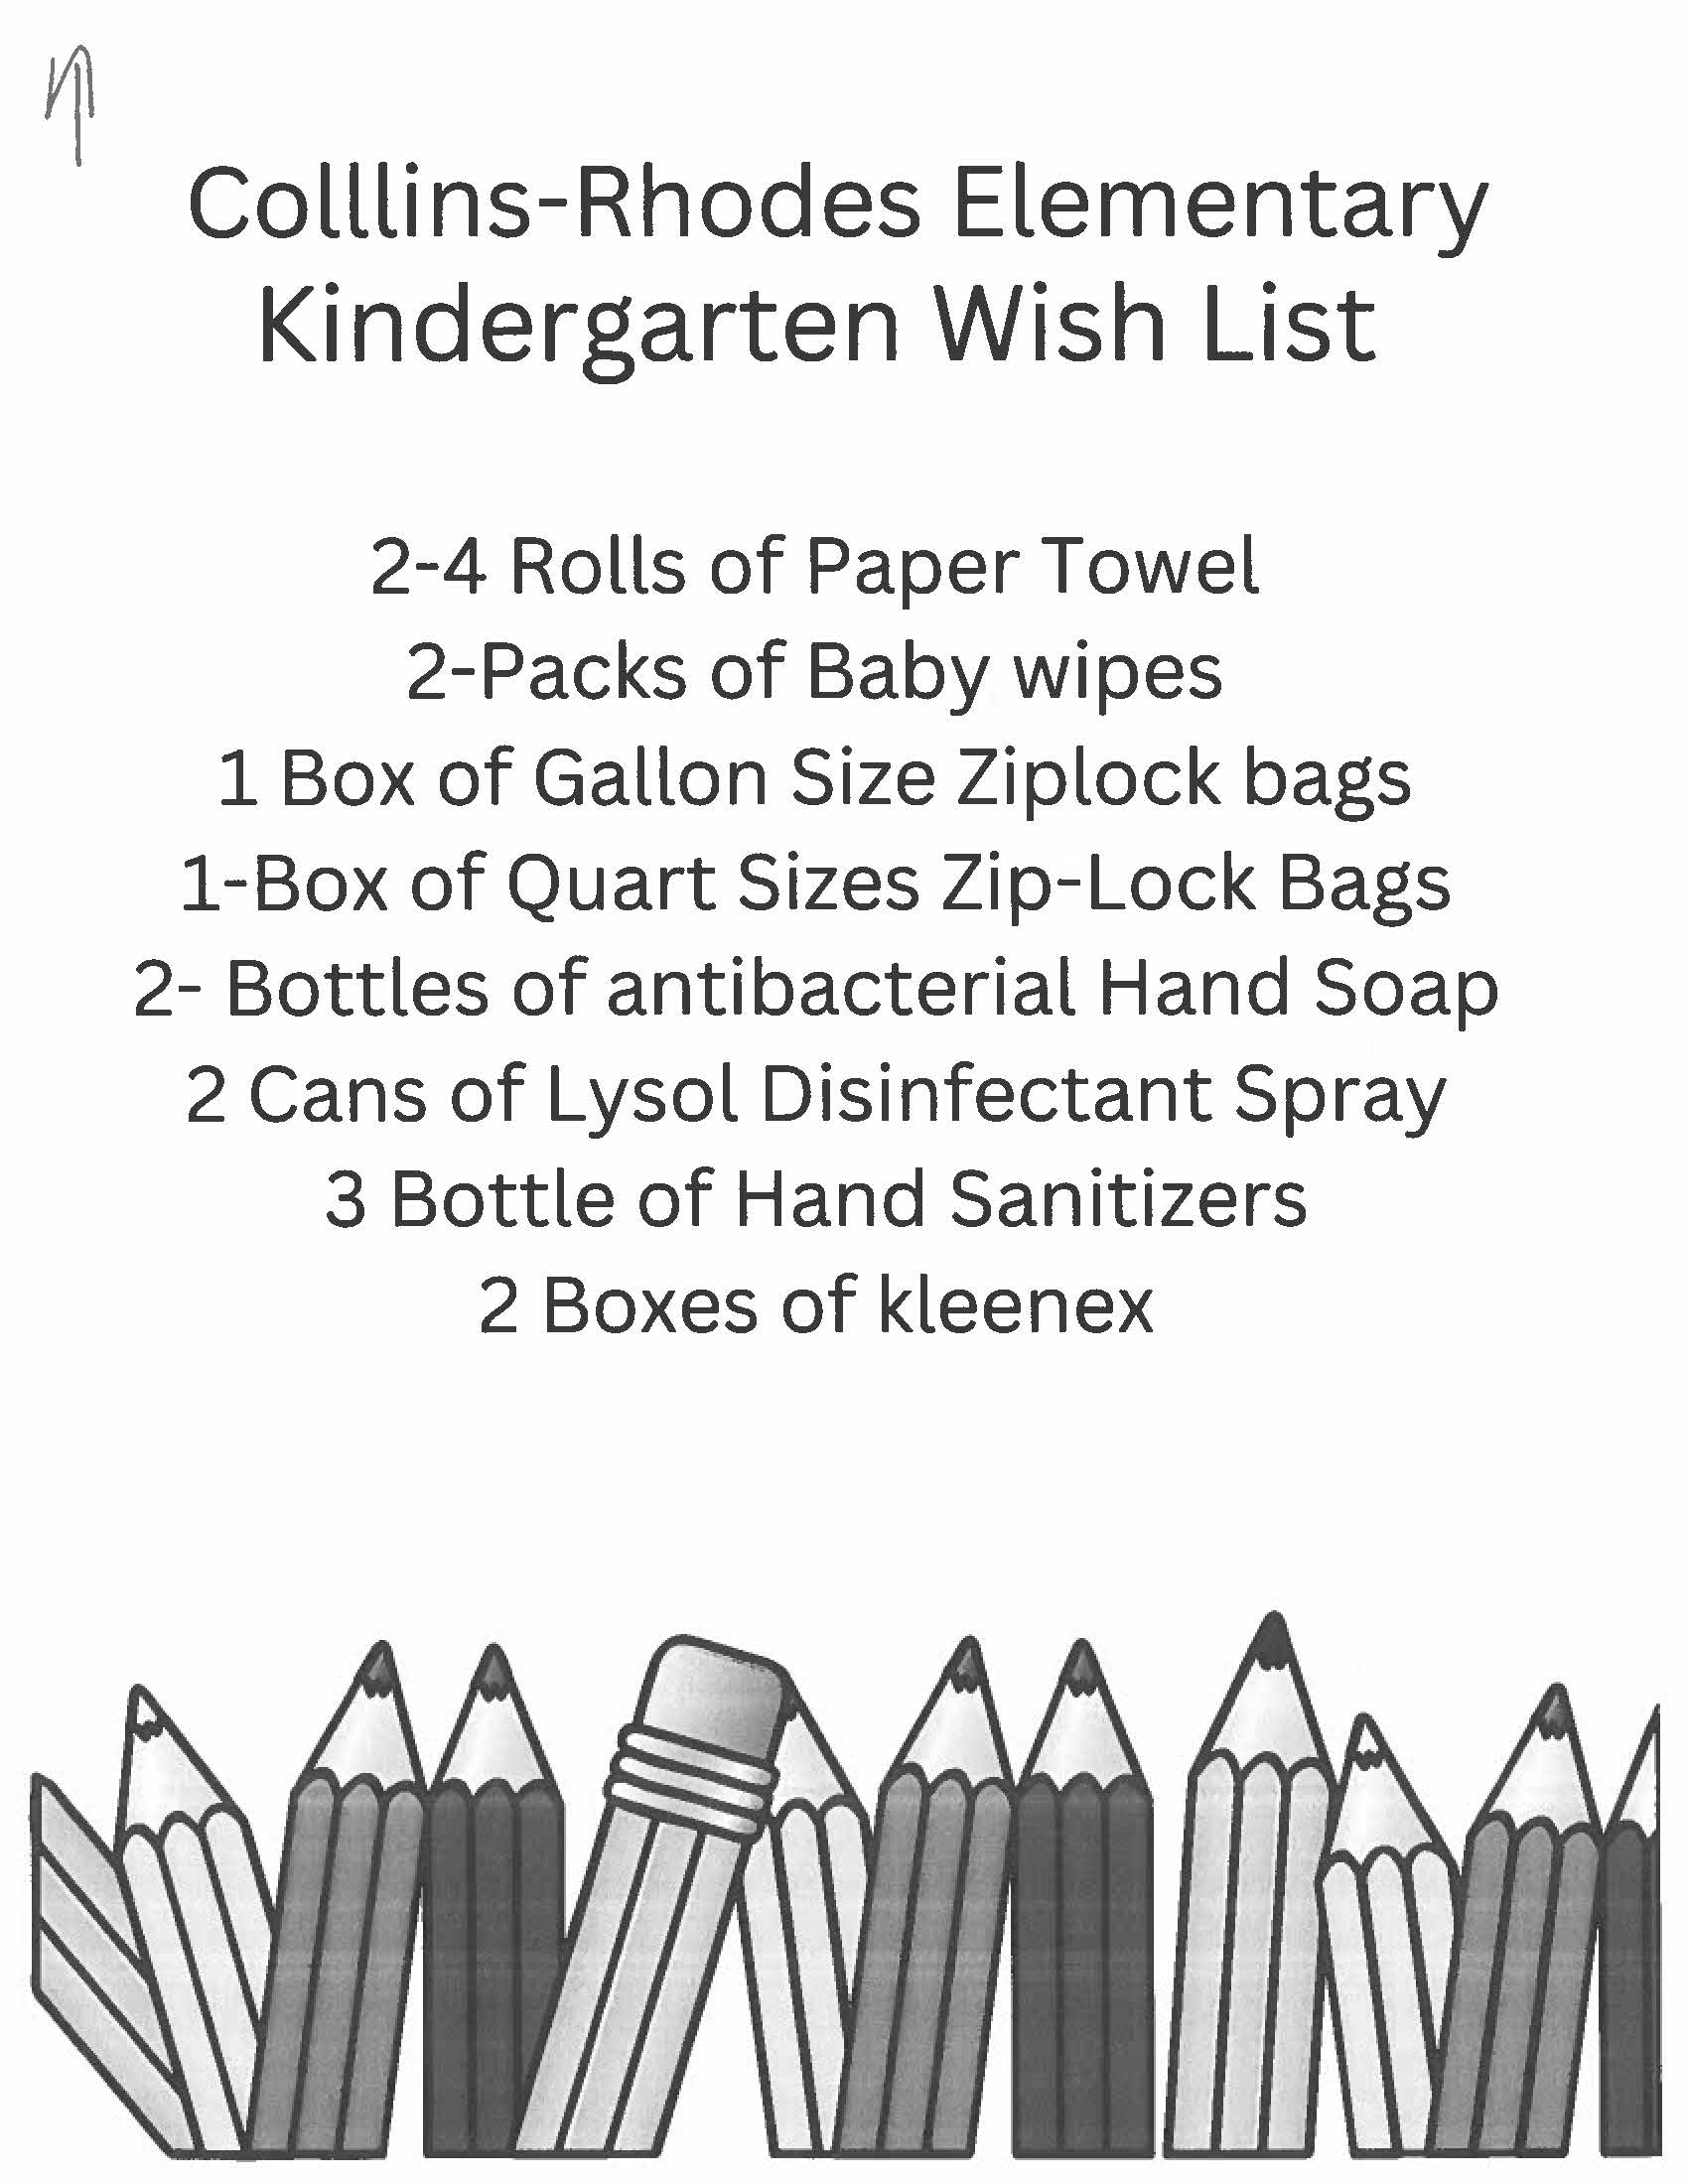 Classroom Wish Lists